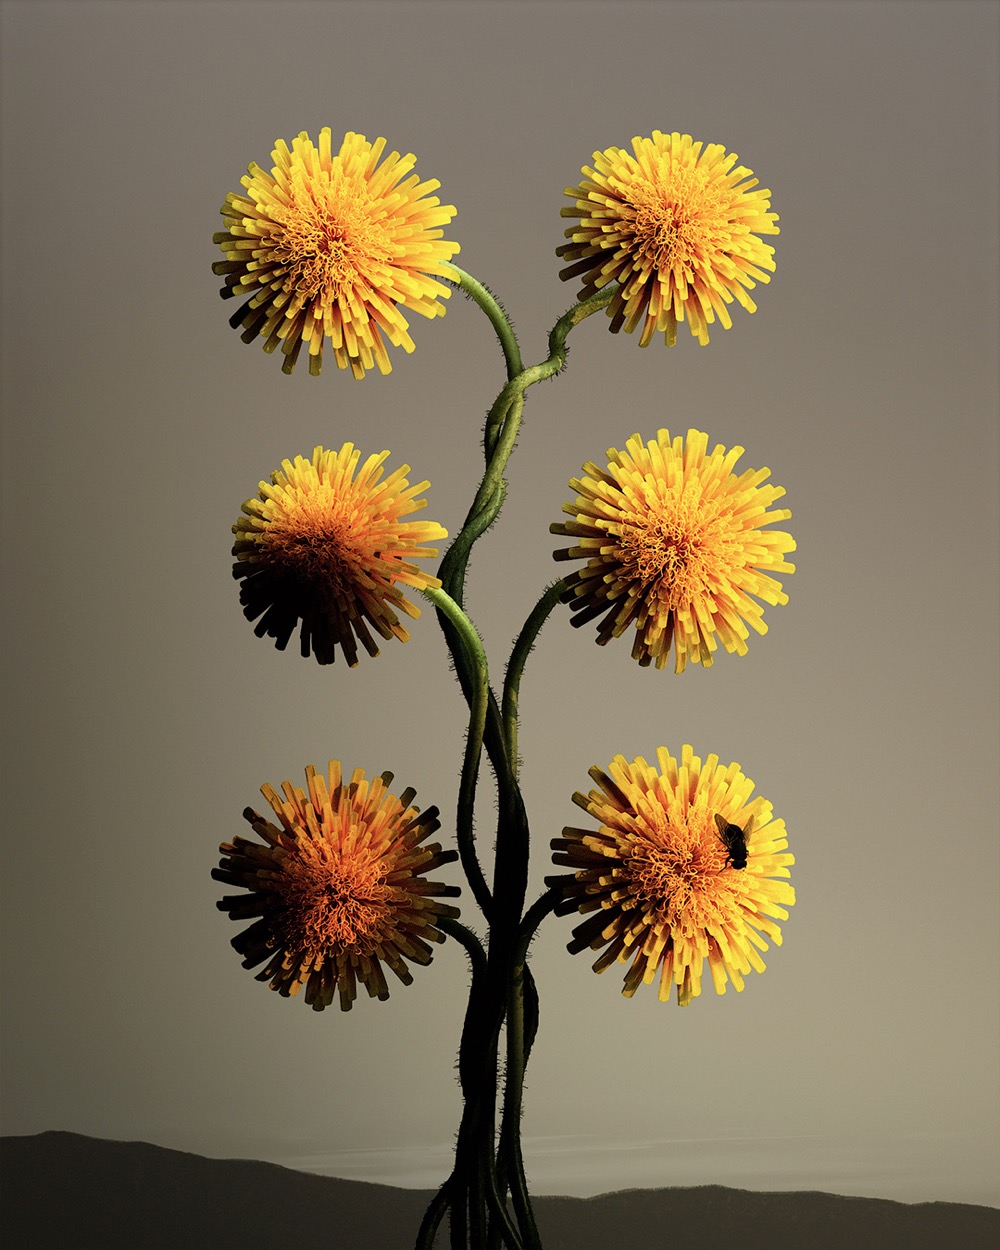 digitally conjured flowers